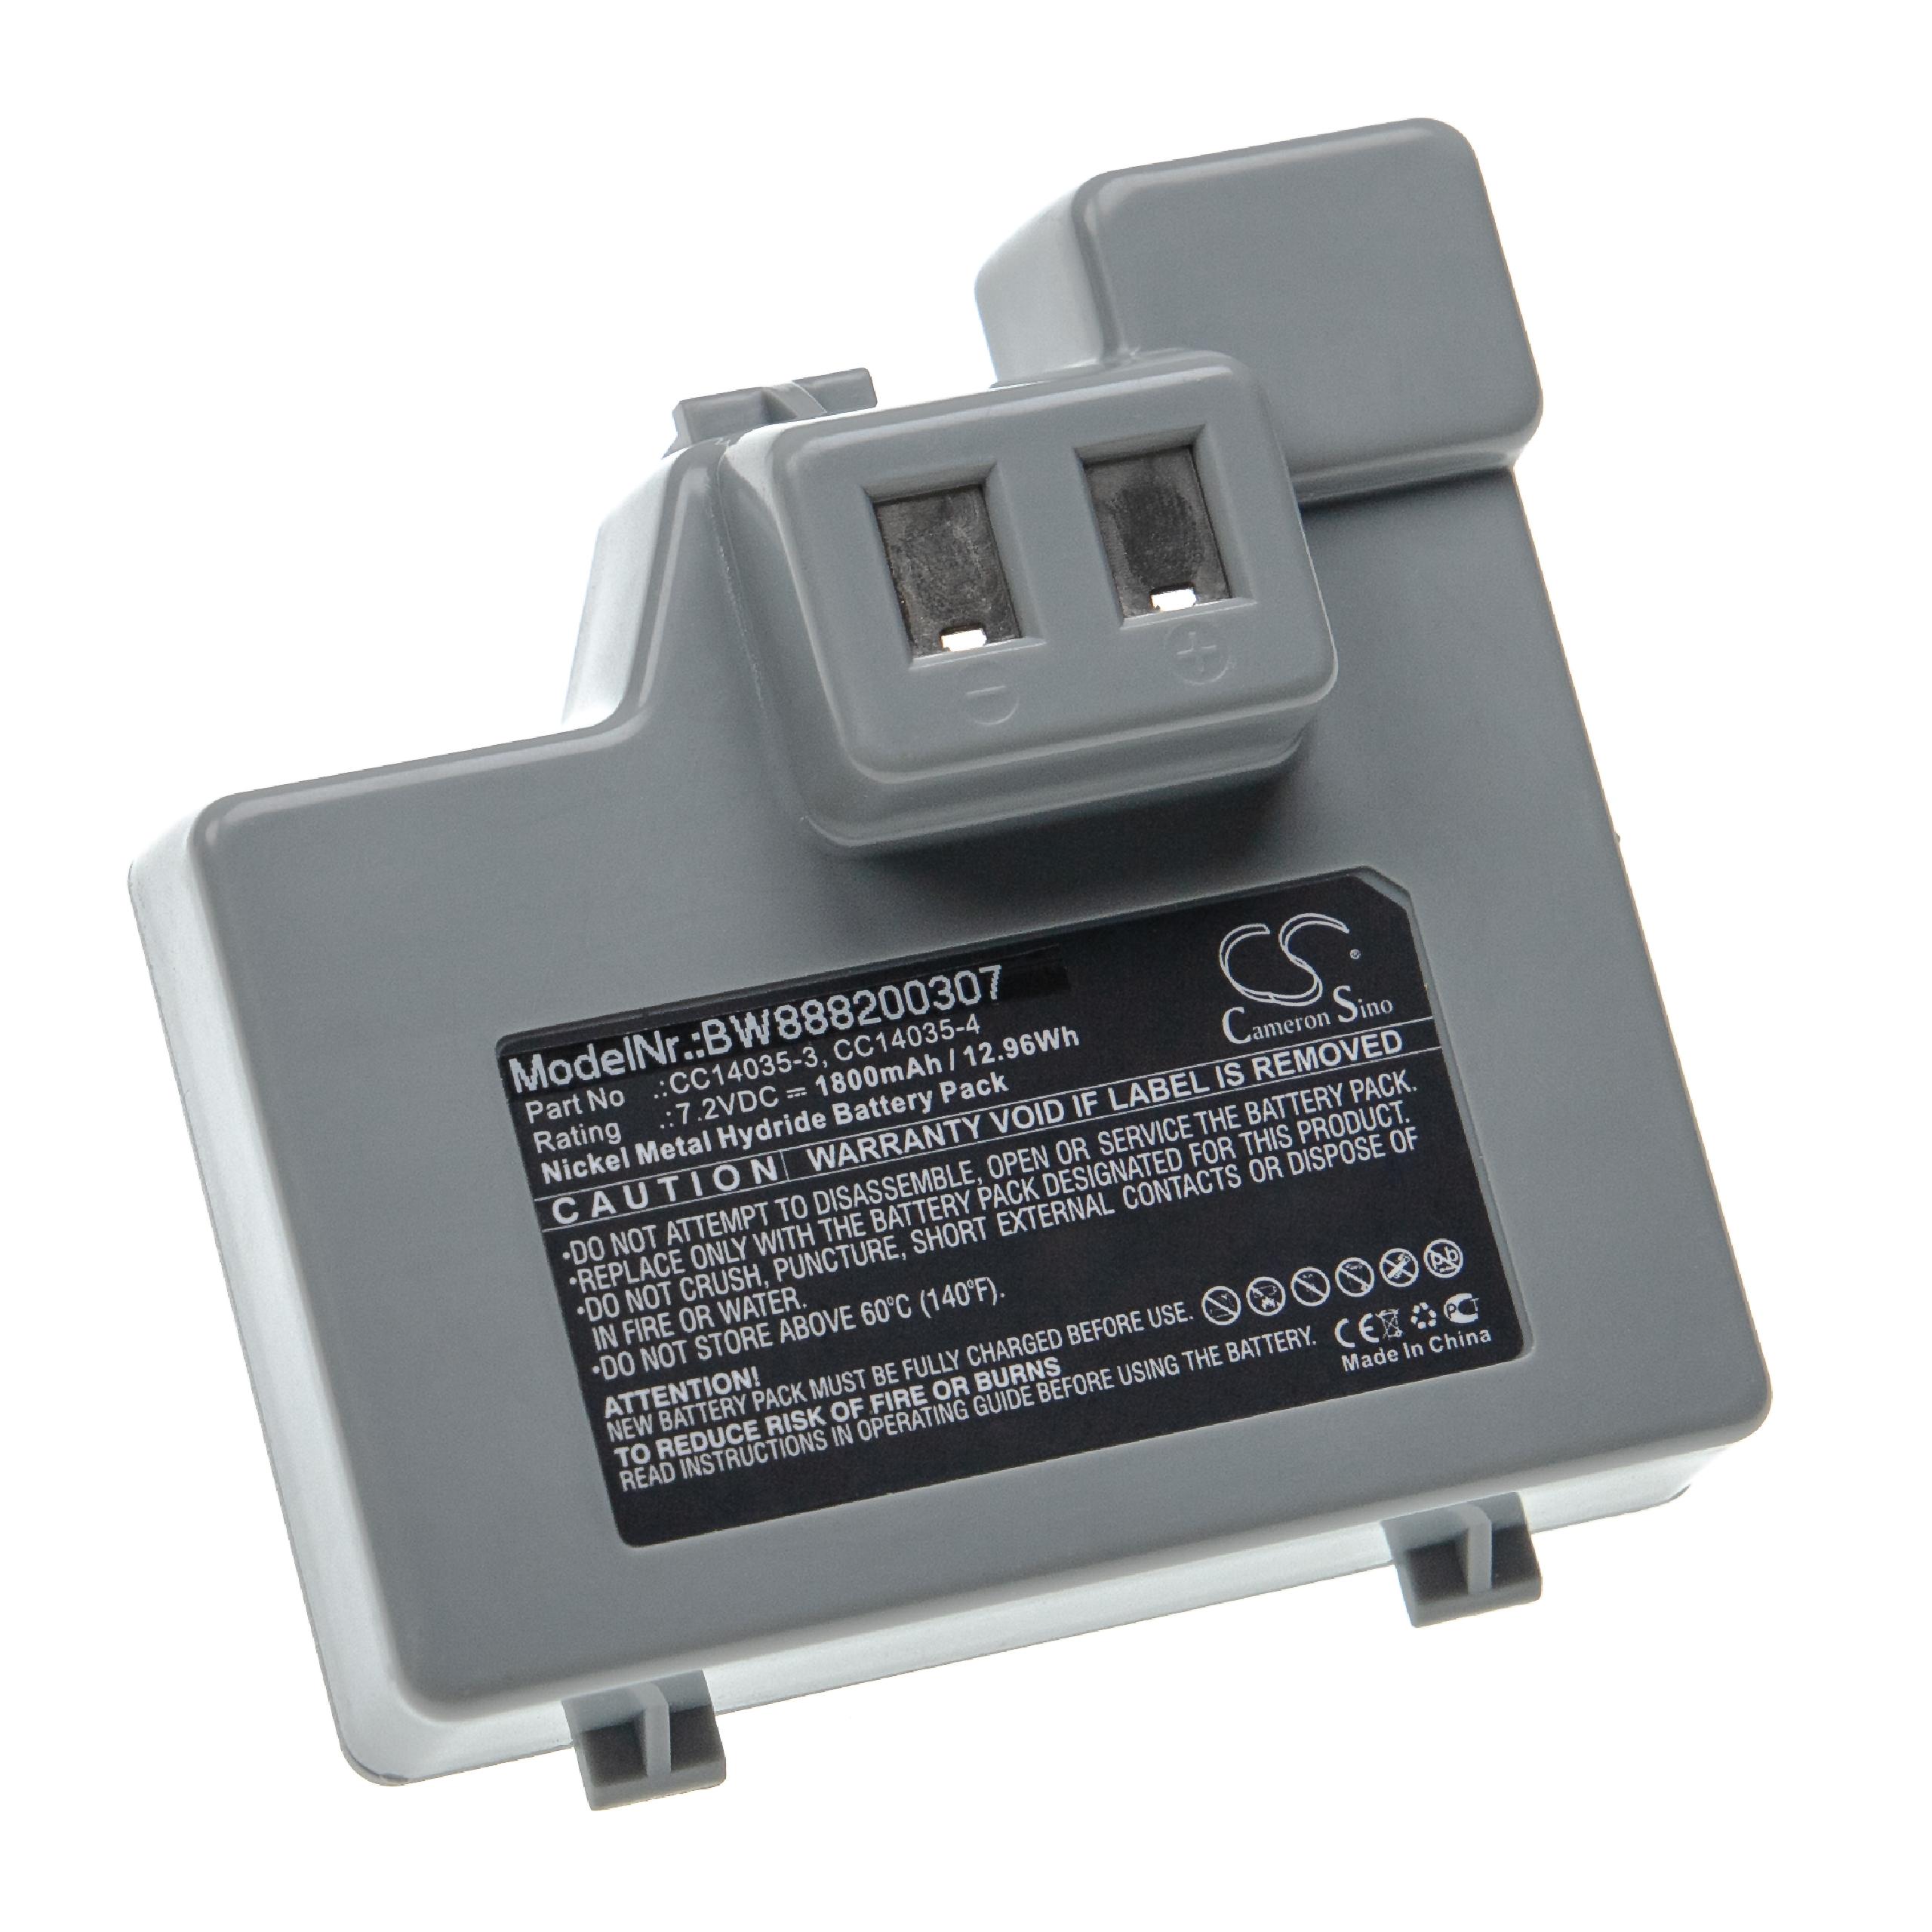 Akumulator do drukarki / drukarki etykiet zamiennik Zebra CC14035-4, CC14035-3 - 1800 mAh 7,2 V NiMH